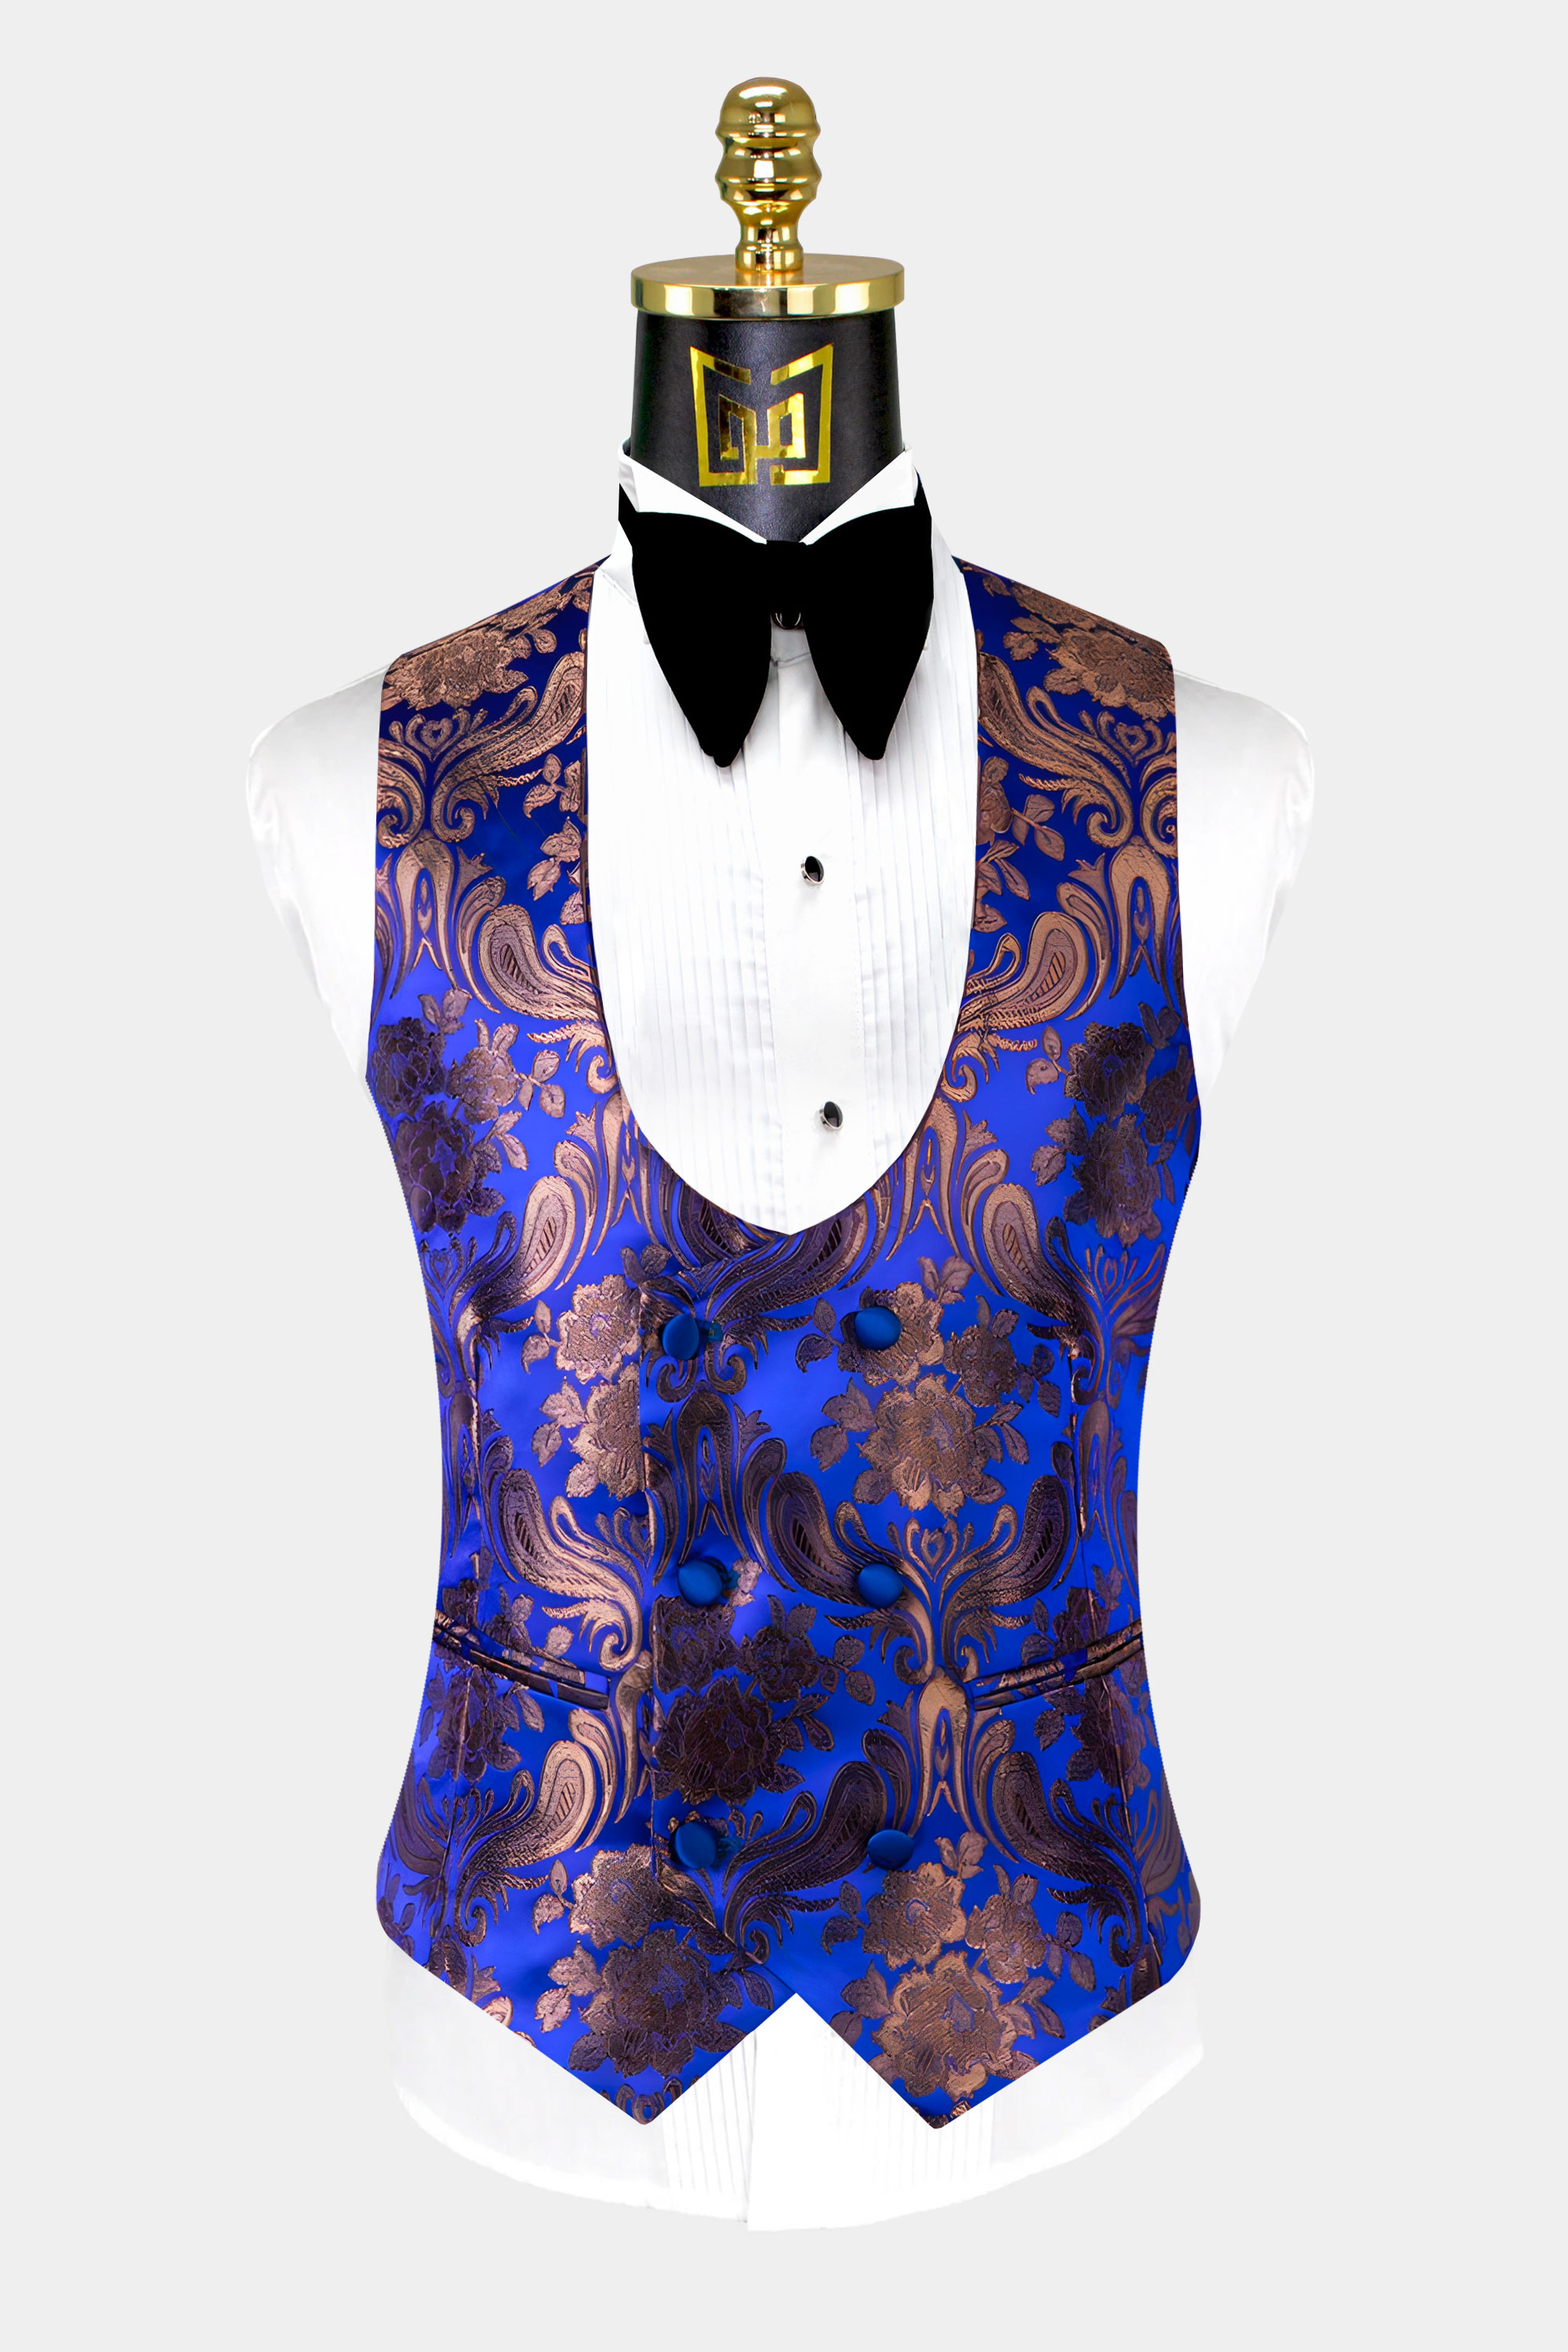 Royal-Blue-Tuxedo-Vest-from-Gentlemans-Guru.com